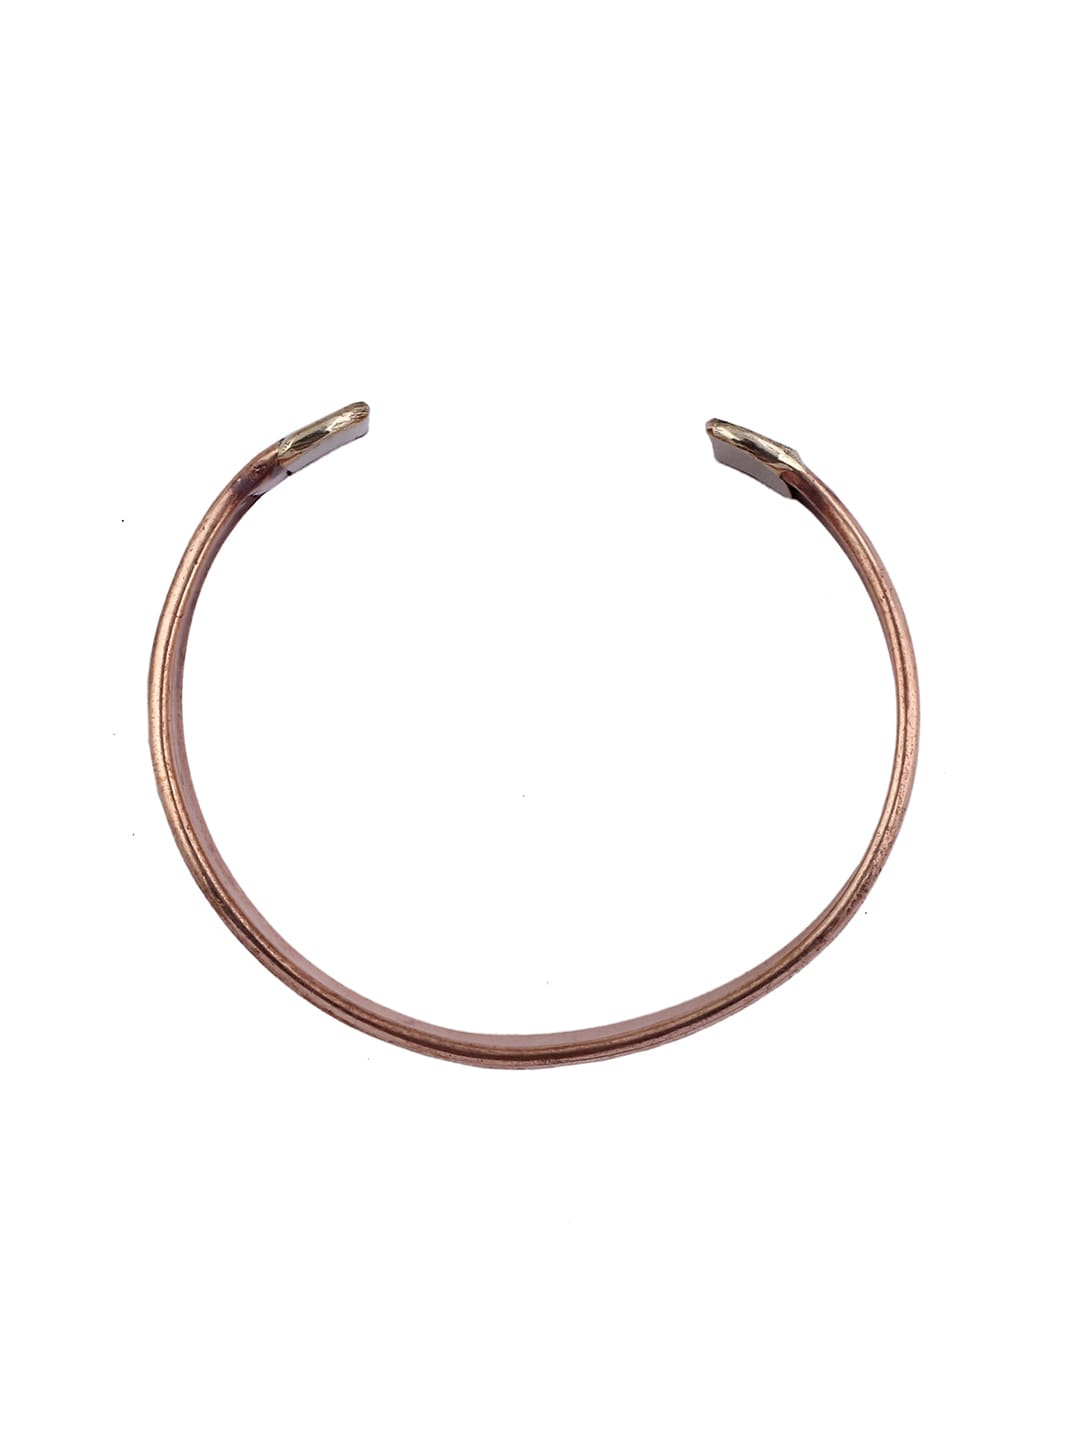 EL REGALO Men Brown Brass Antique Copper-Plated Cuff Bracelet - for Men
Style ID: 17157484